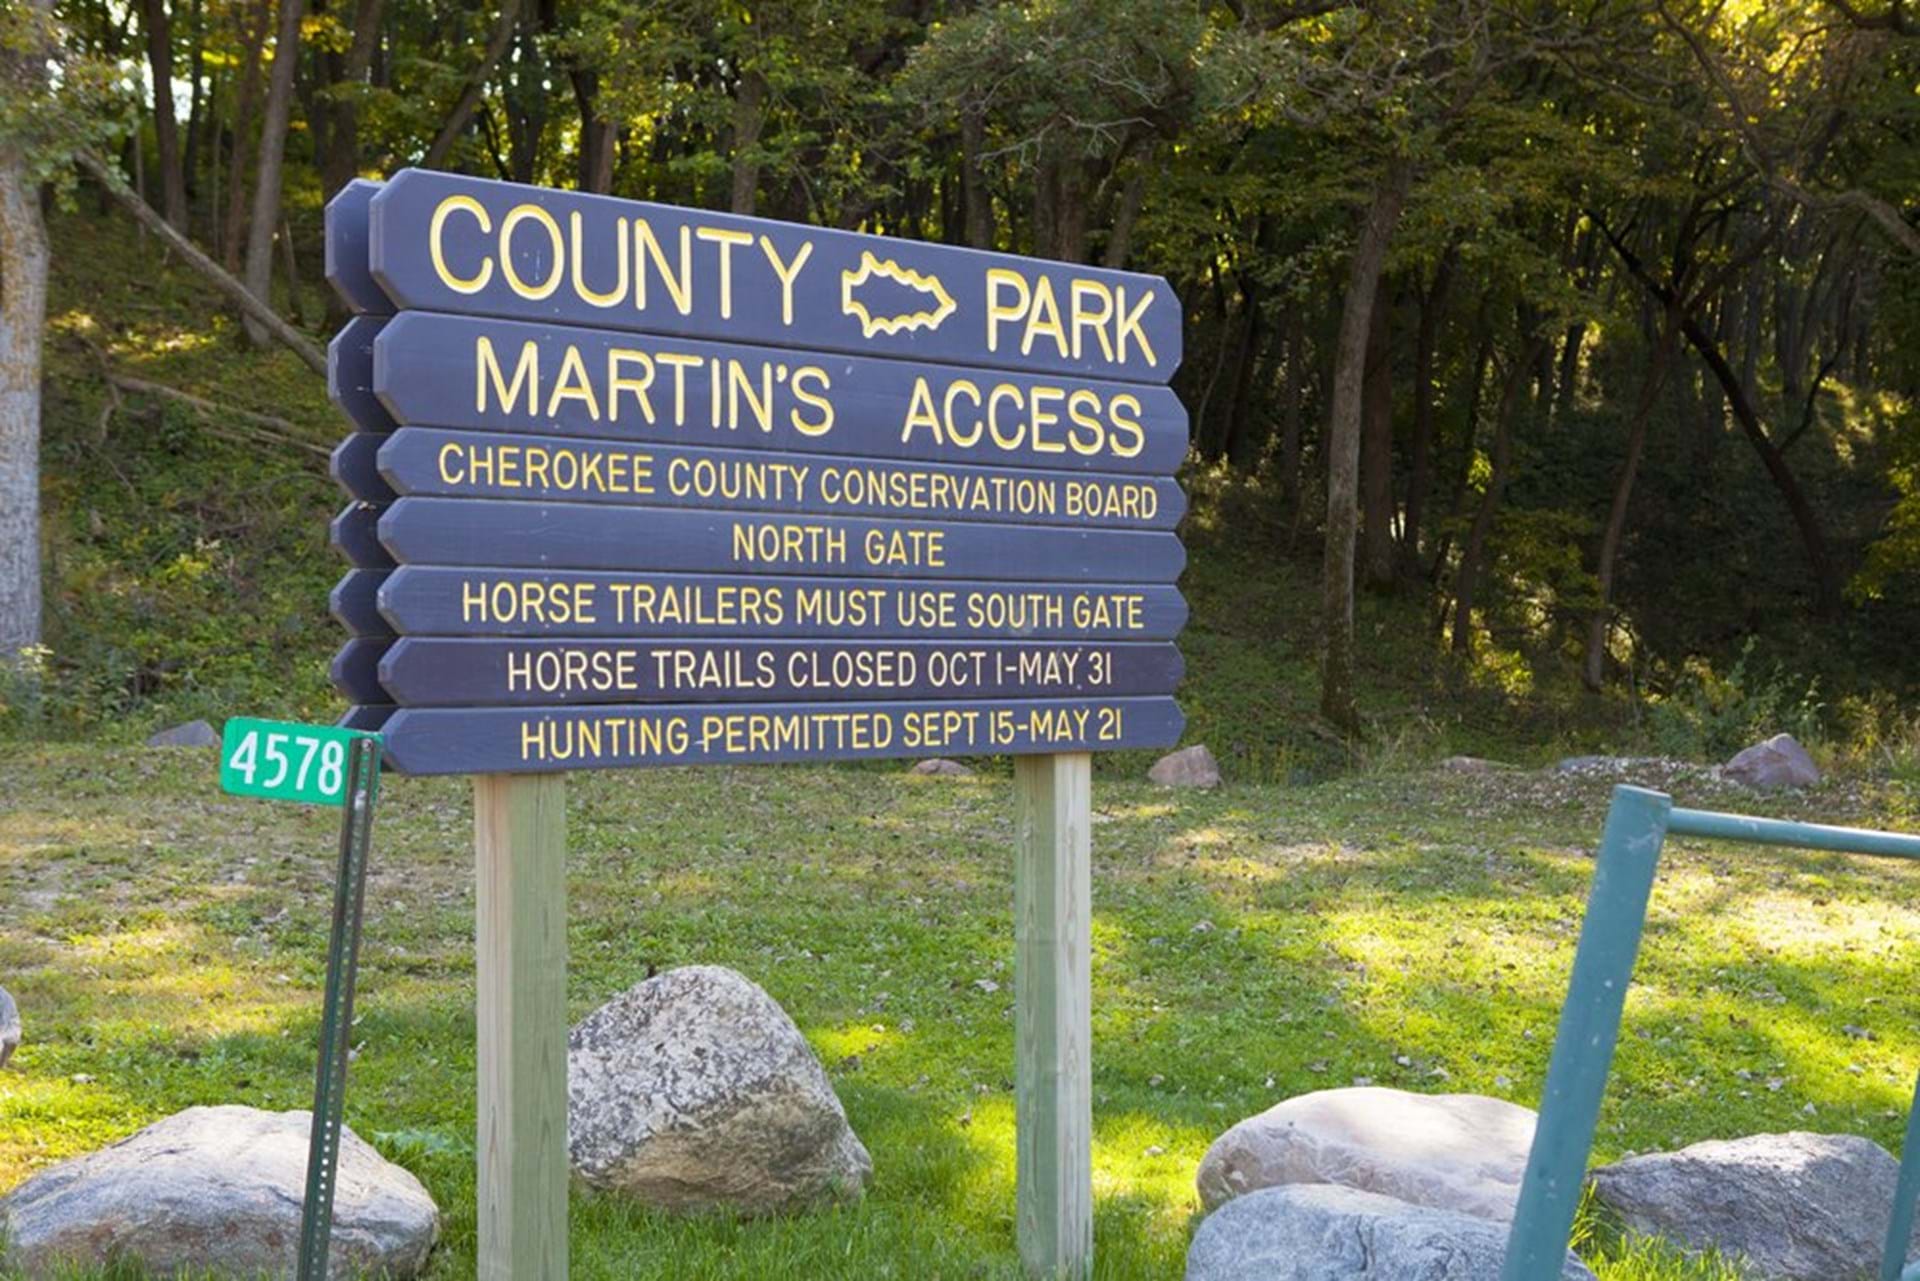 Martin's Access